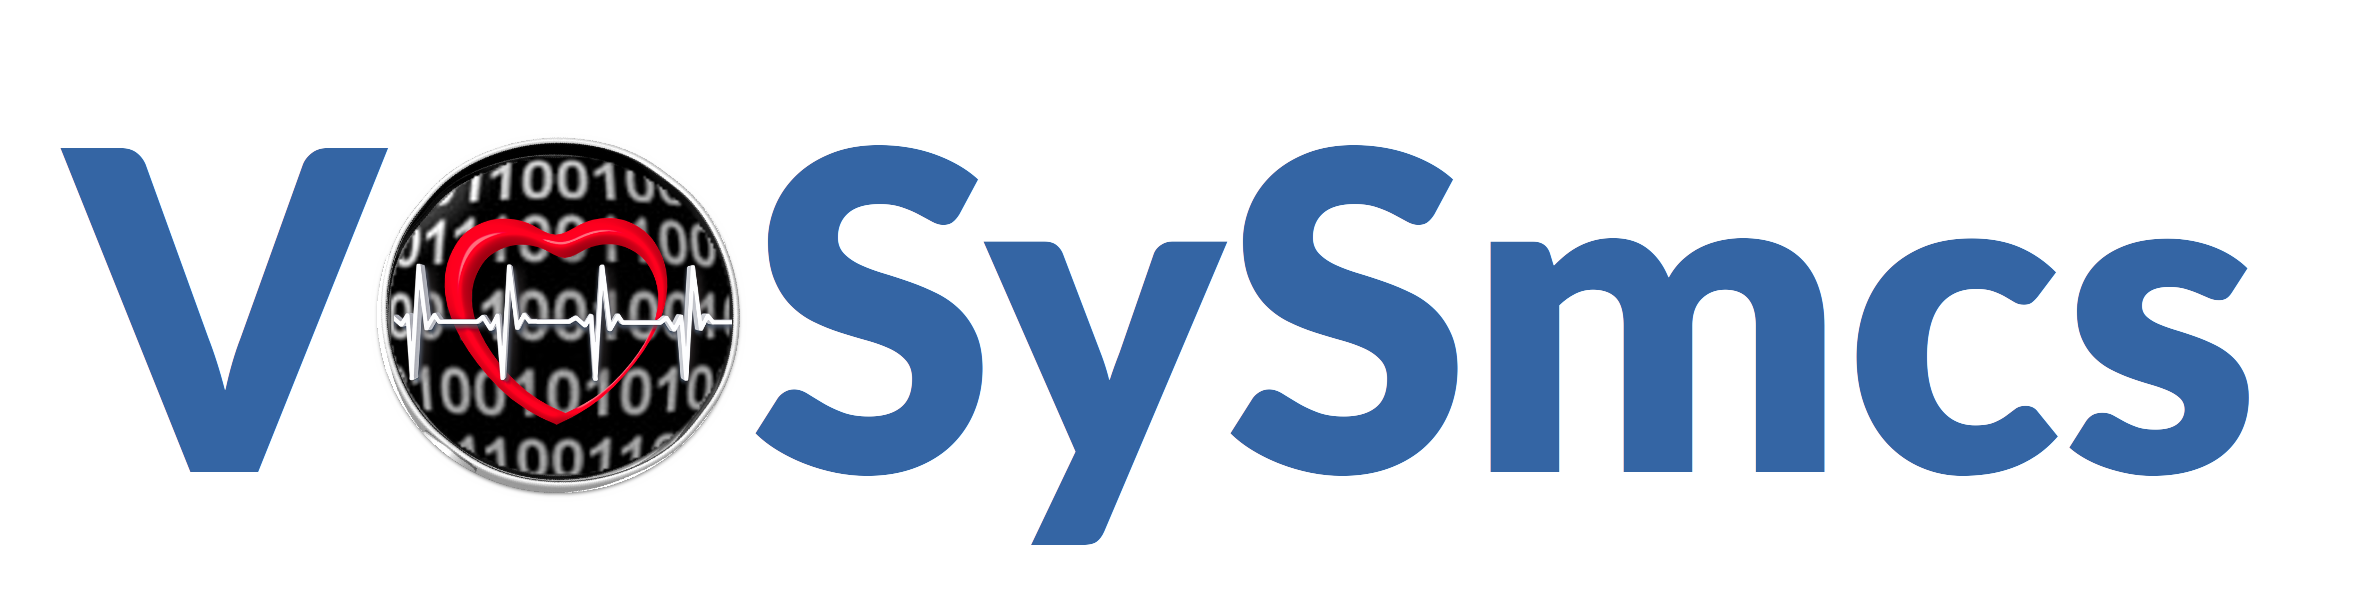 VOSySmcs: automotive mixed-criticality virtualization product software stack